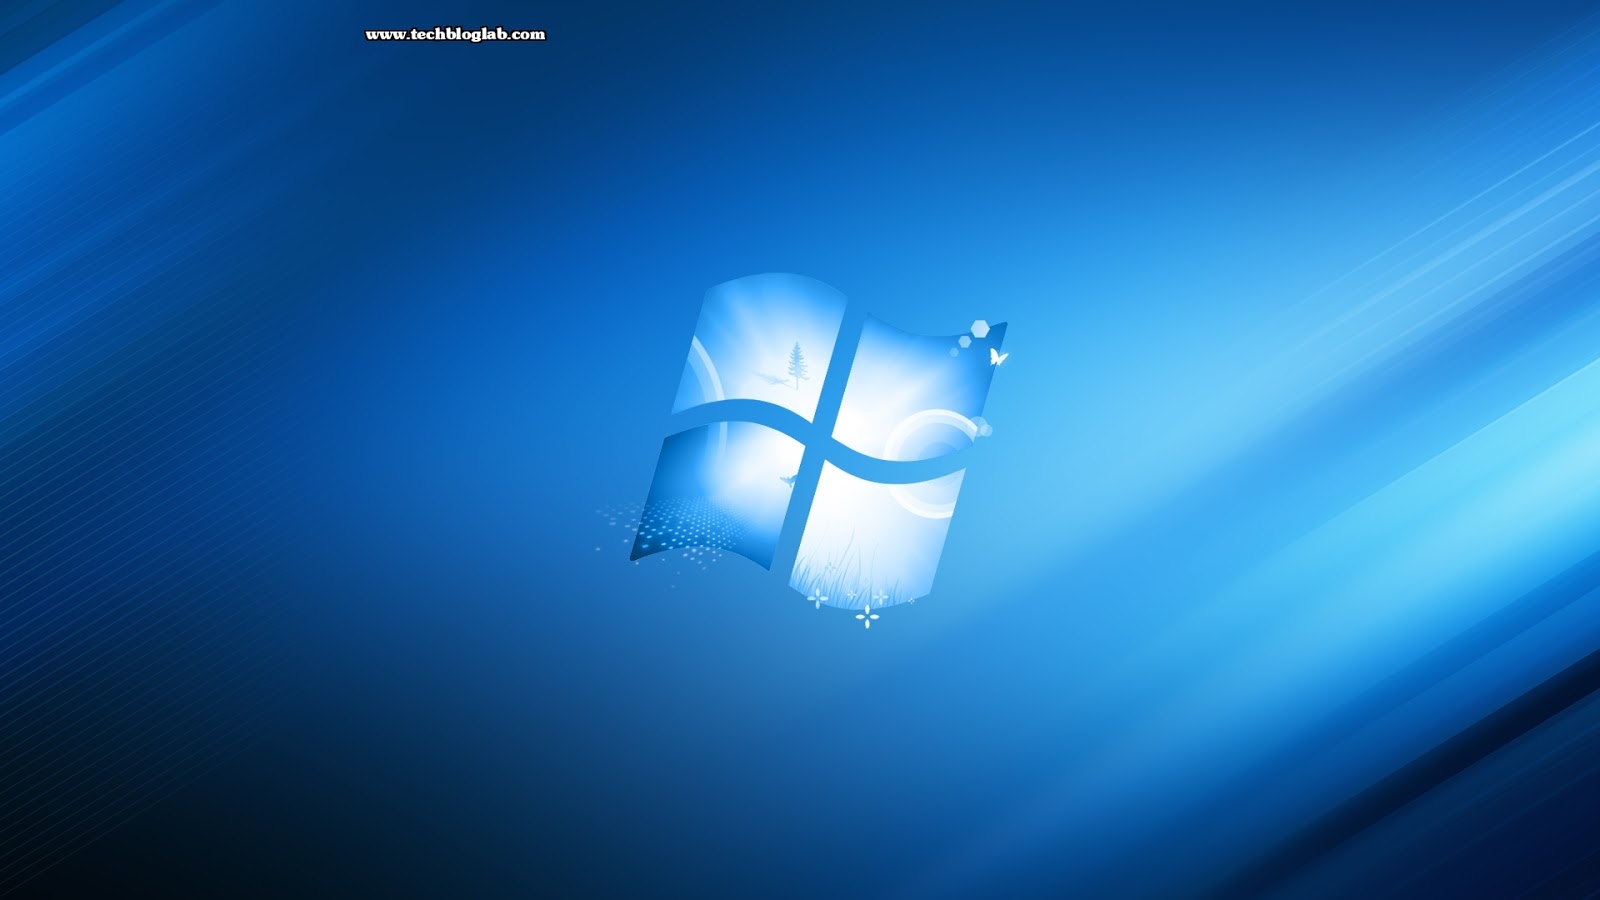 Awesome Windows Wallpaper For Desktop Background